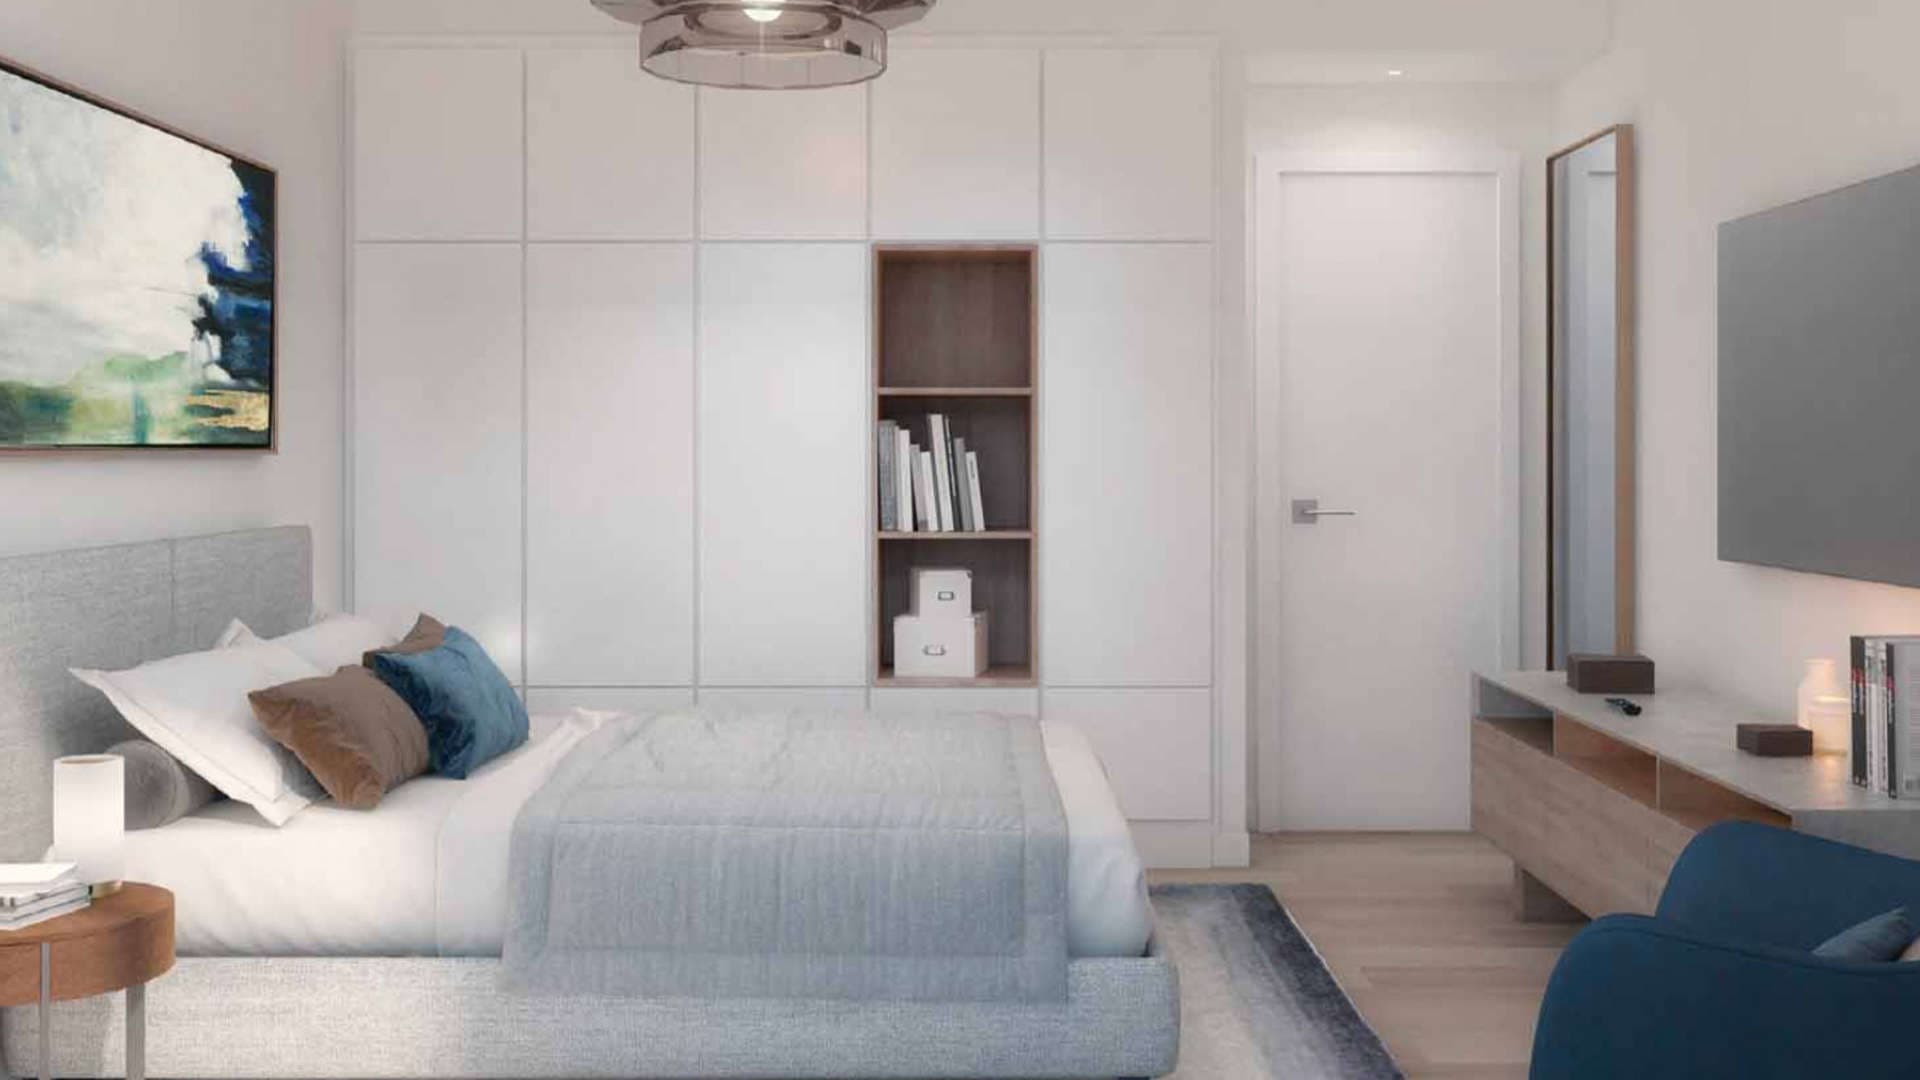 1 Bedroom Apartment For Sale La Mer Lp03434 2c4c17afbb1a2600.jpg